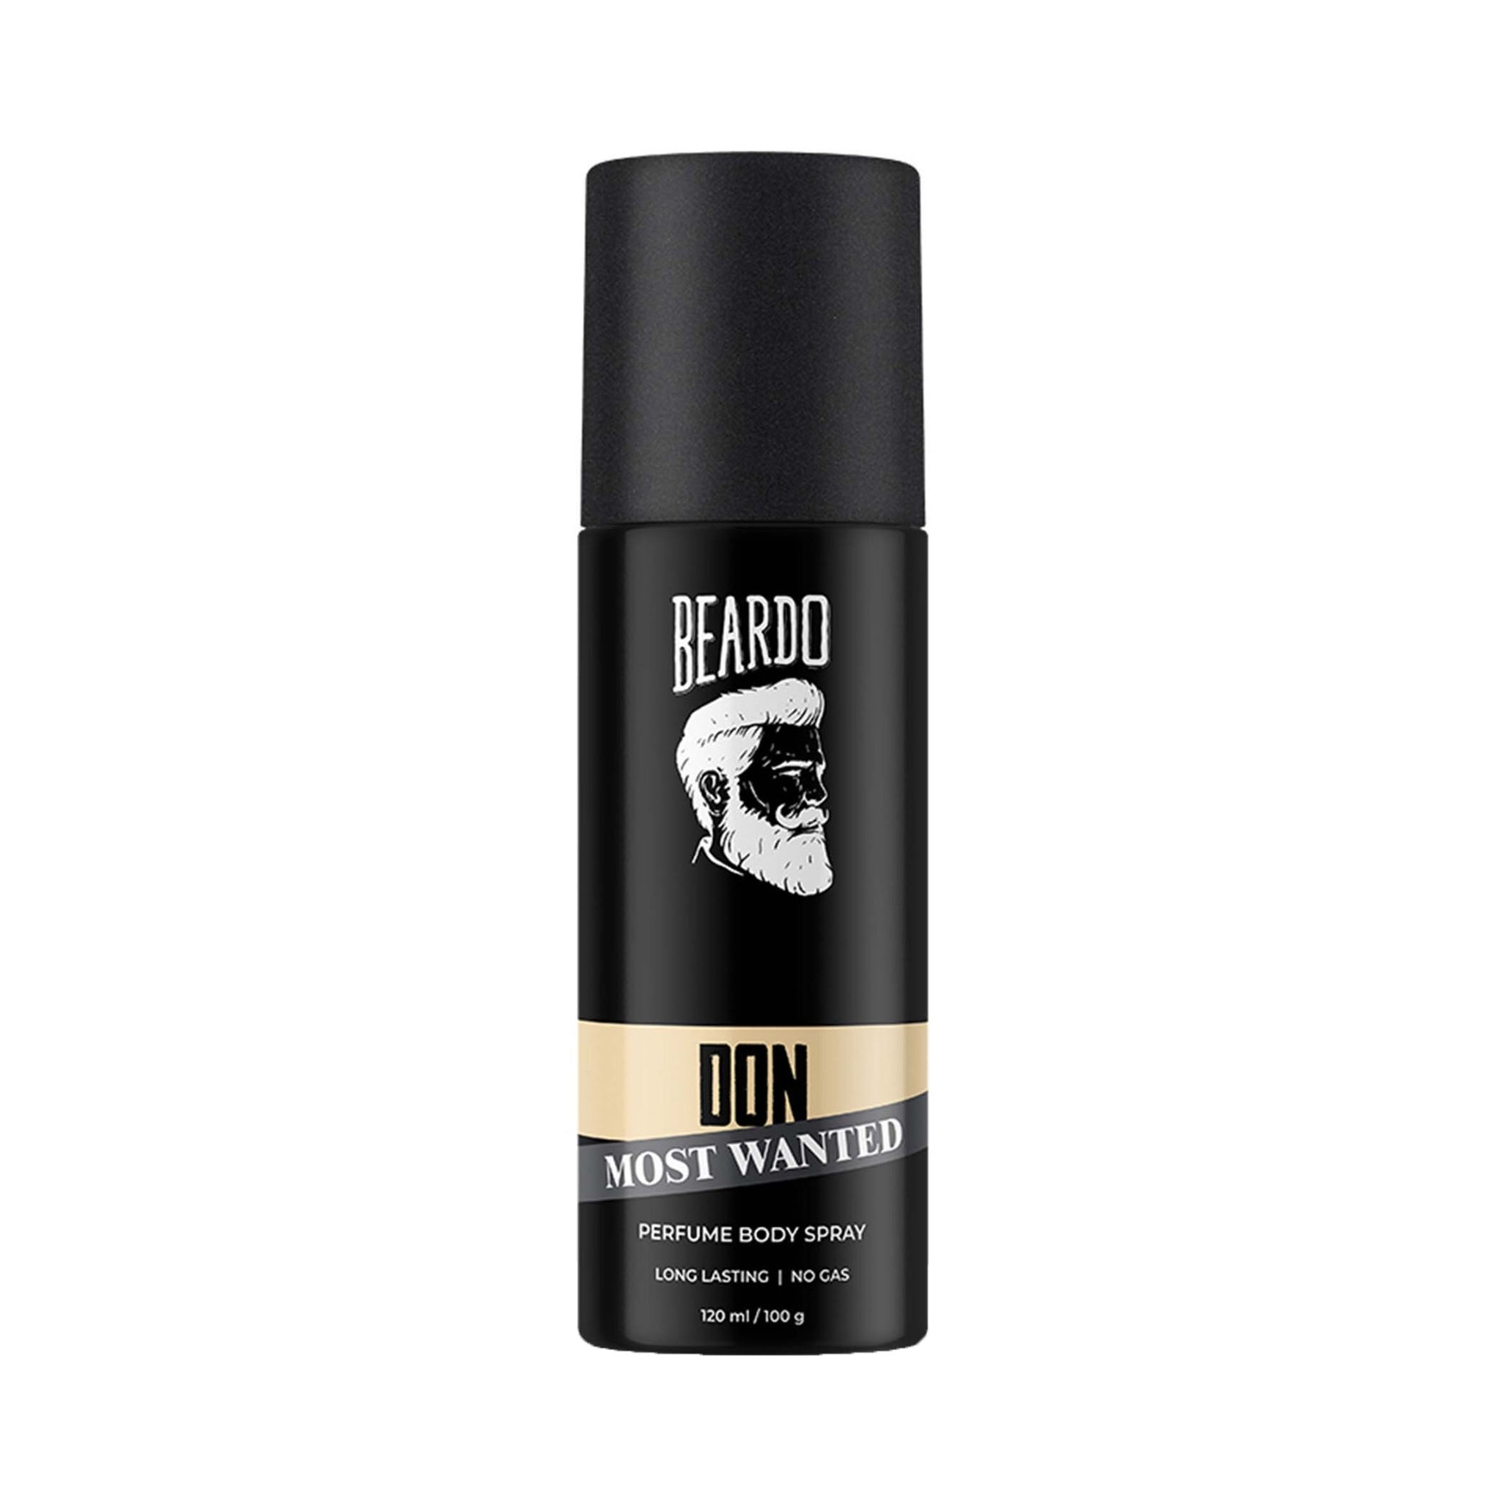 Beardo Don Most Wanted Perfume Body Spray (120ml)